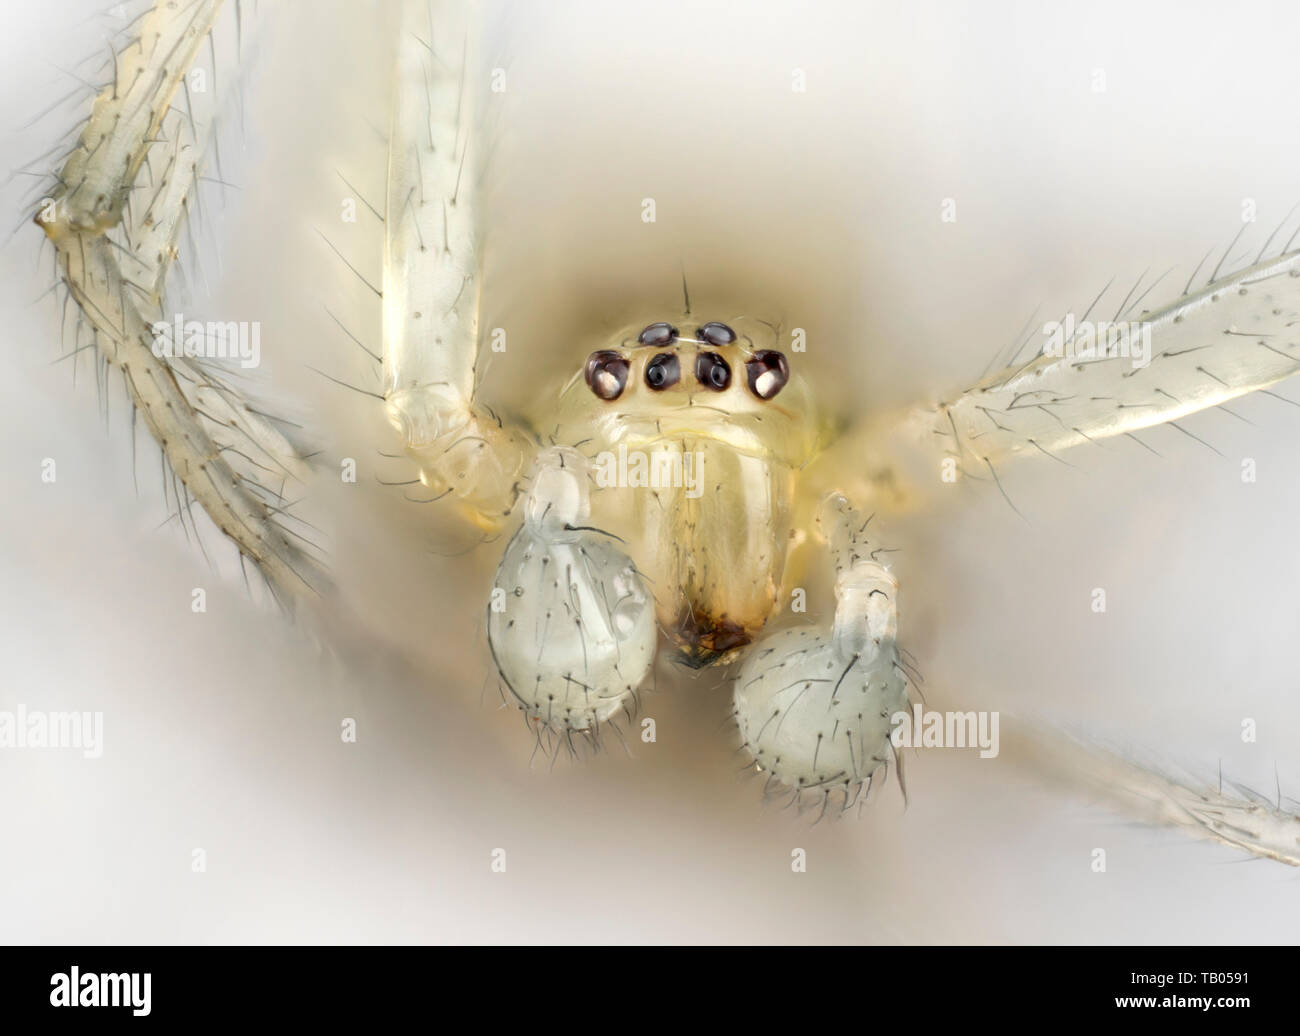 Imature Gurke Araniella cucurbitina, spinne, Makro Frontansicht mit Augen & palps Stockfoto